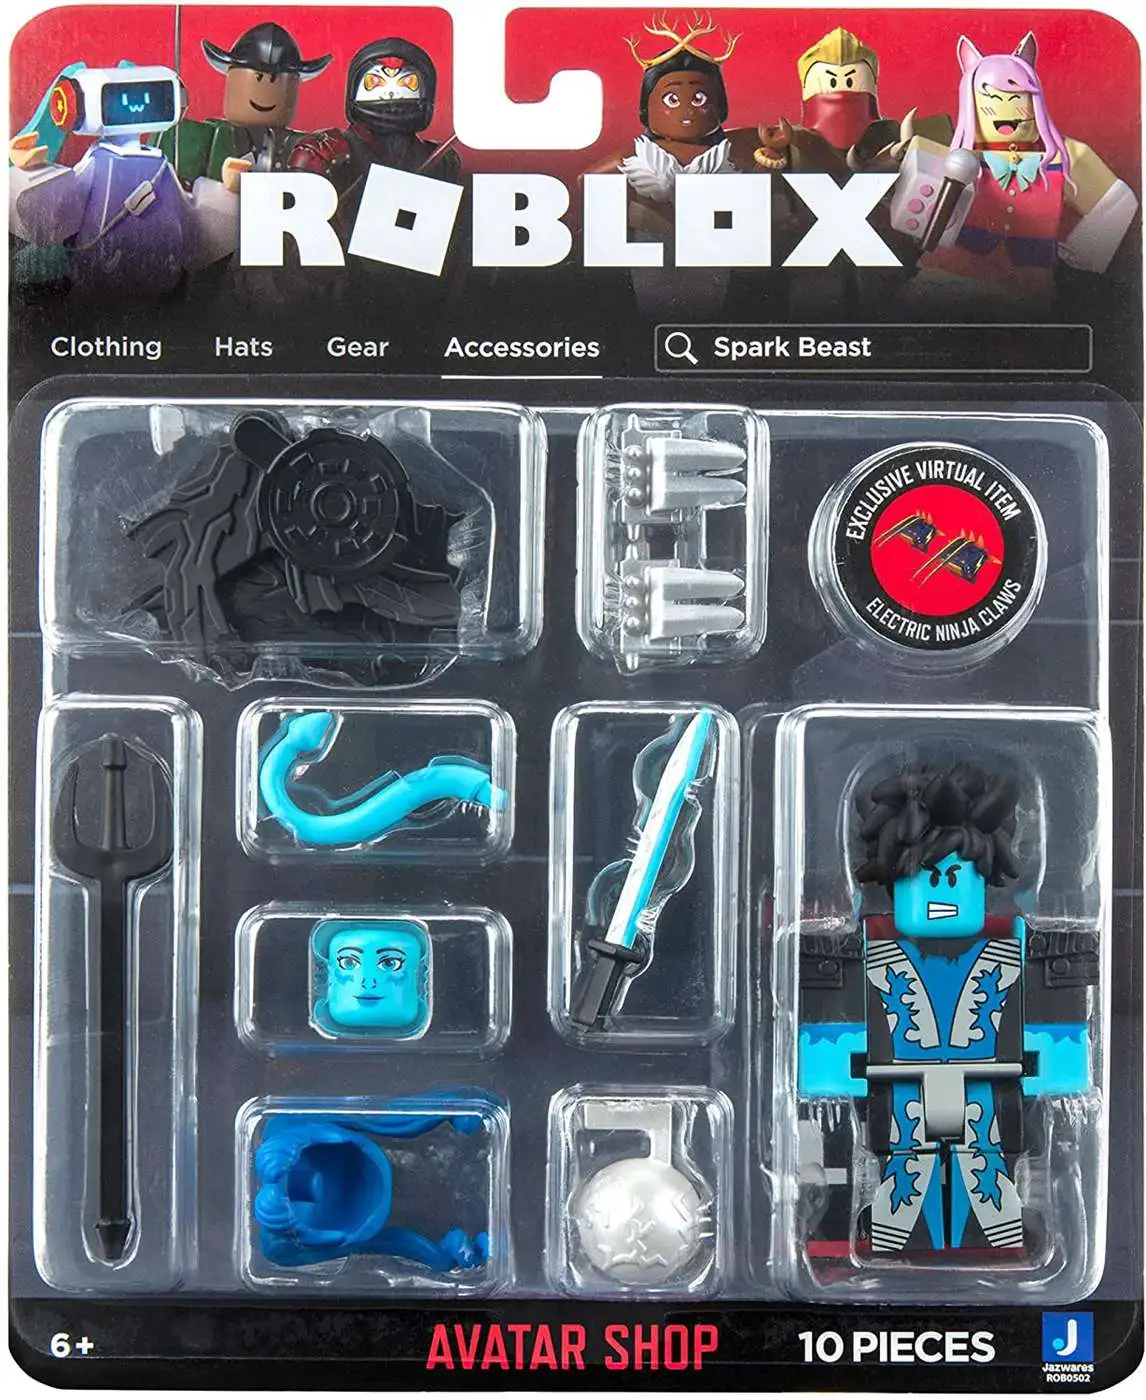 roblox Jailbreak toy code *digital Delivery*